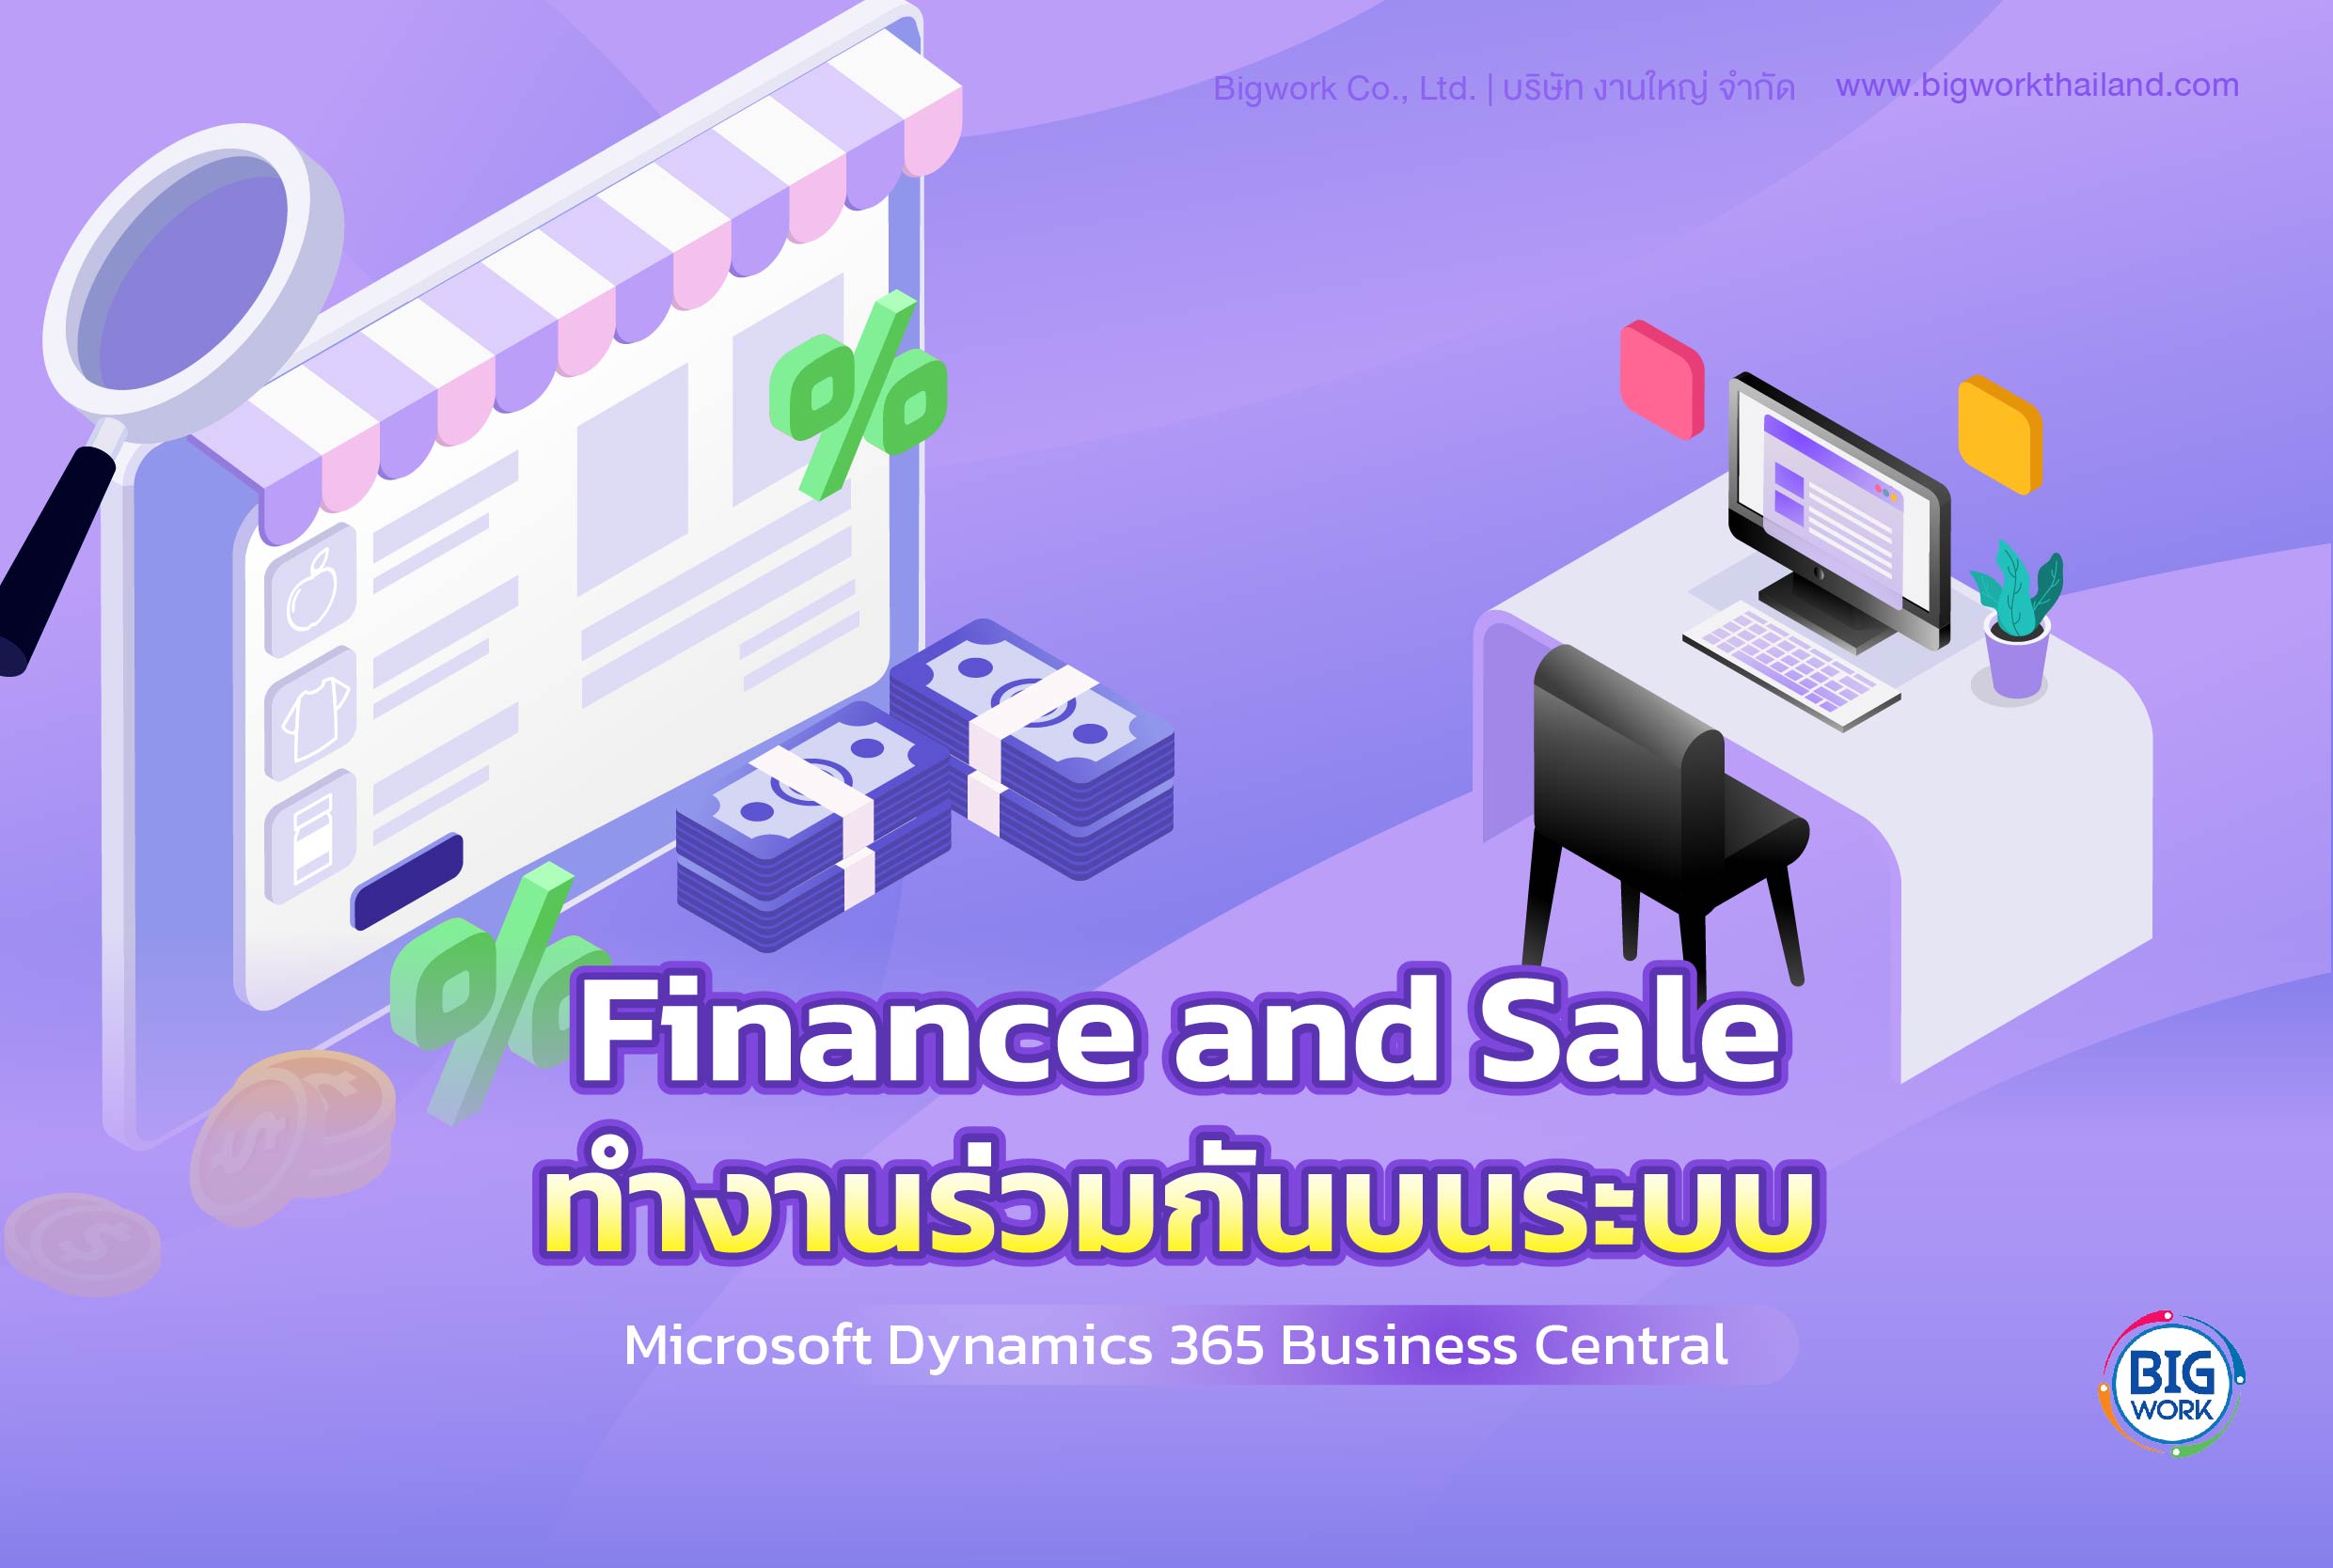 Finance and Sale ทำงานร่วมกันบนระบบ Microsoft Dynamics 365 Business Central